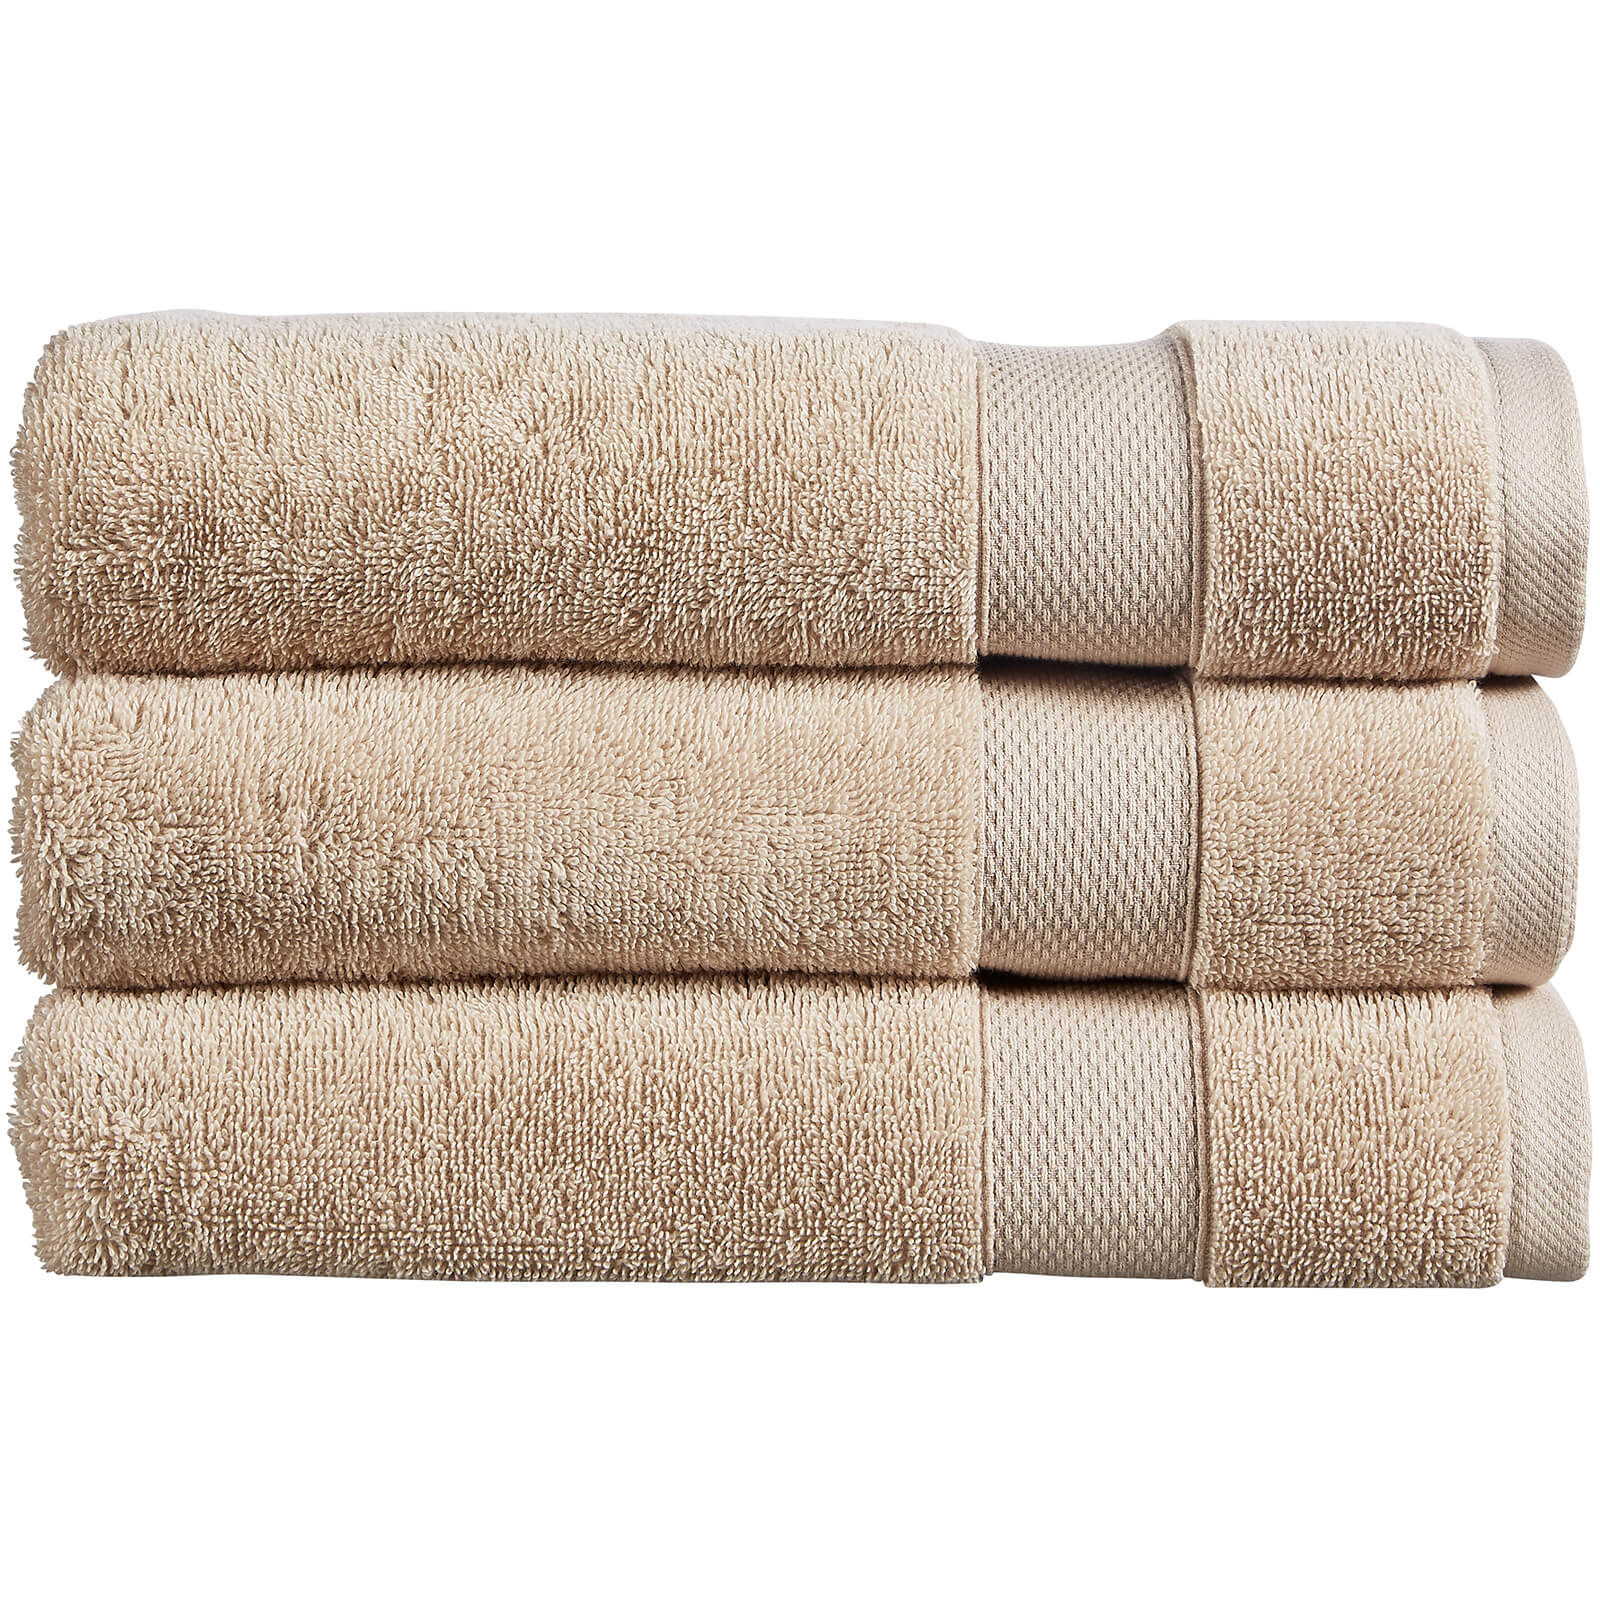 Christy Refresh Bath Towel - Set of 4 - Driftwood